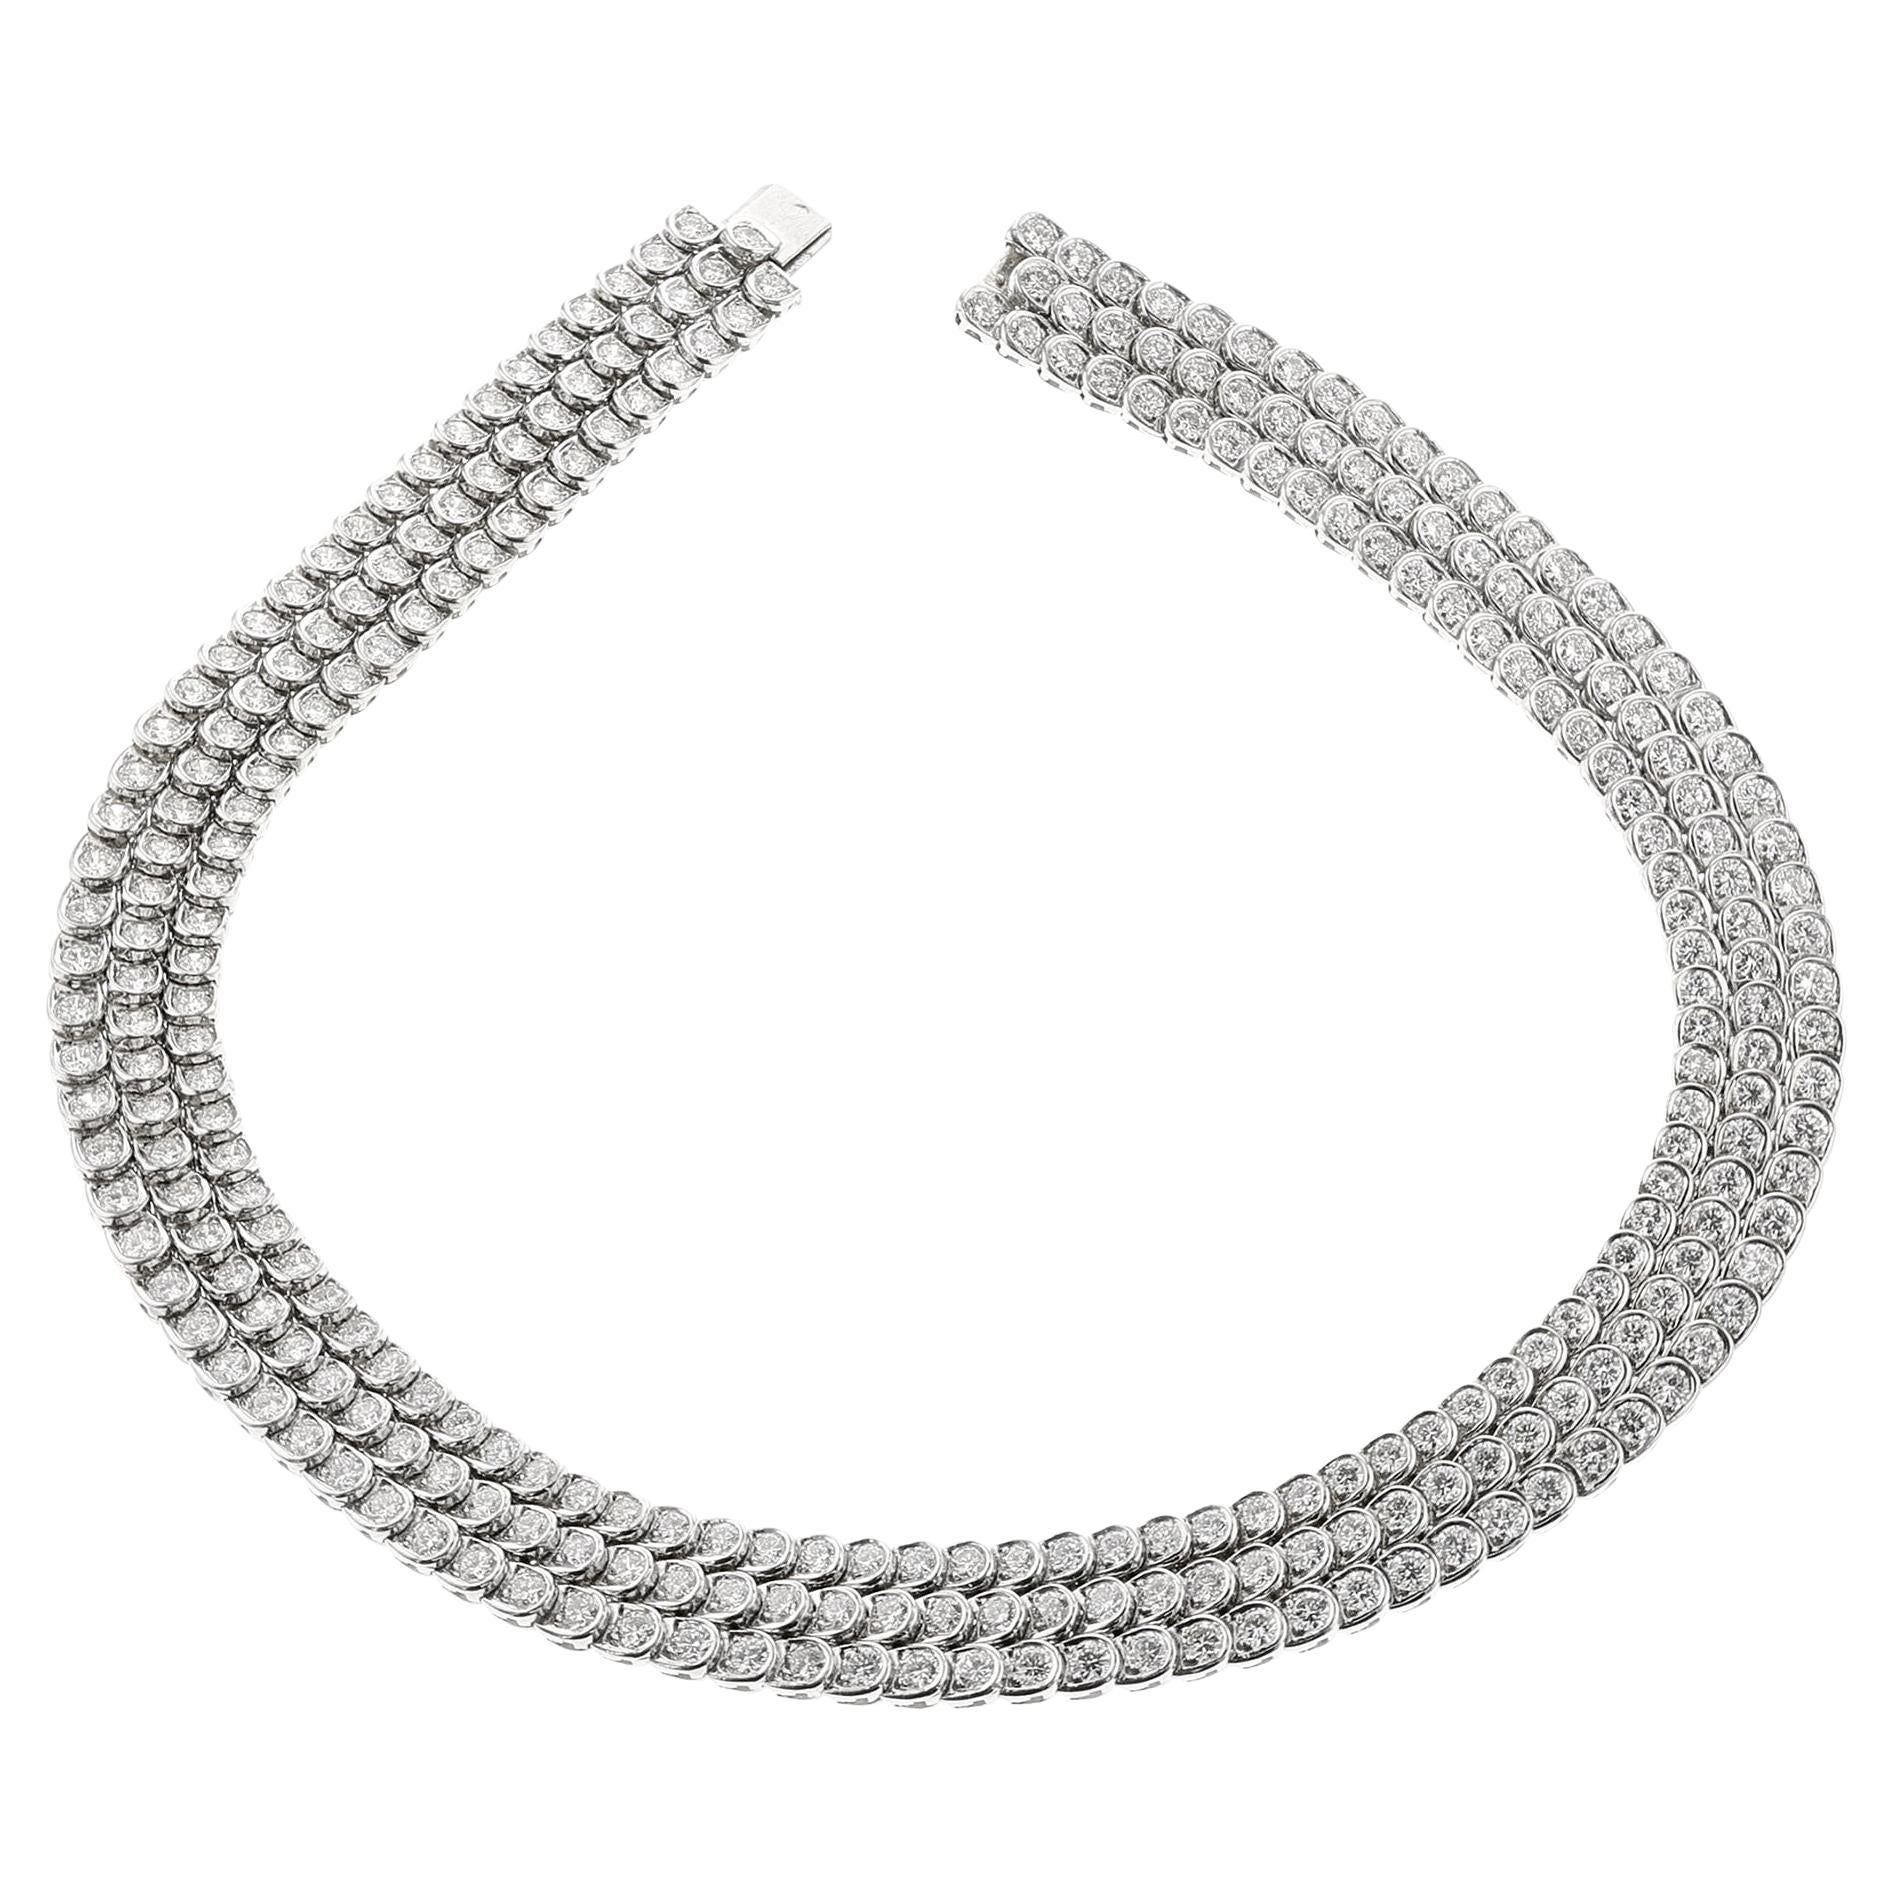 Van Cleef & Arpels Pery et Fils Three Line Diamond Necklace, 18k